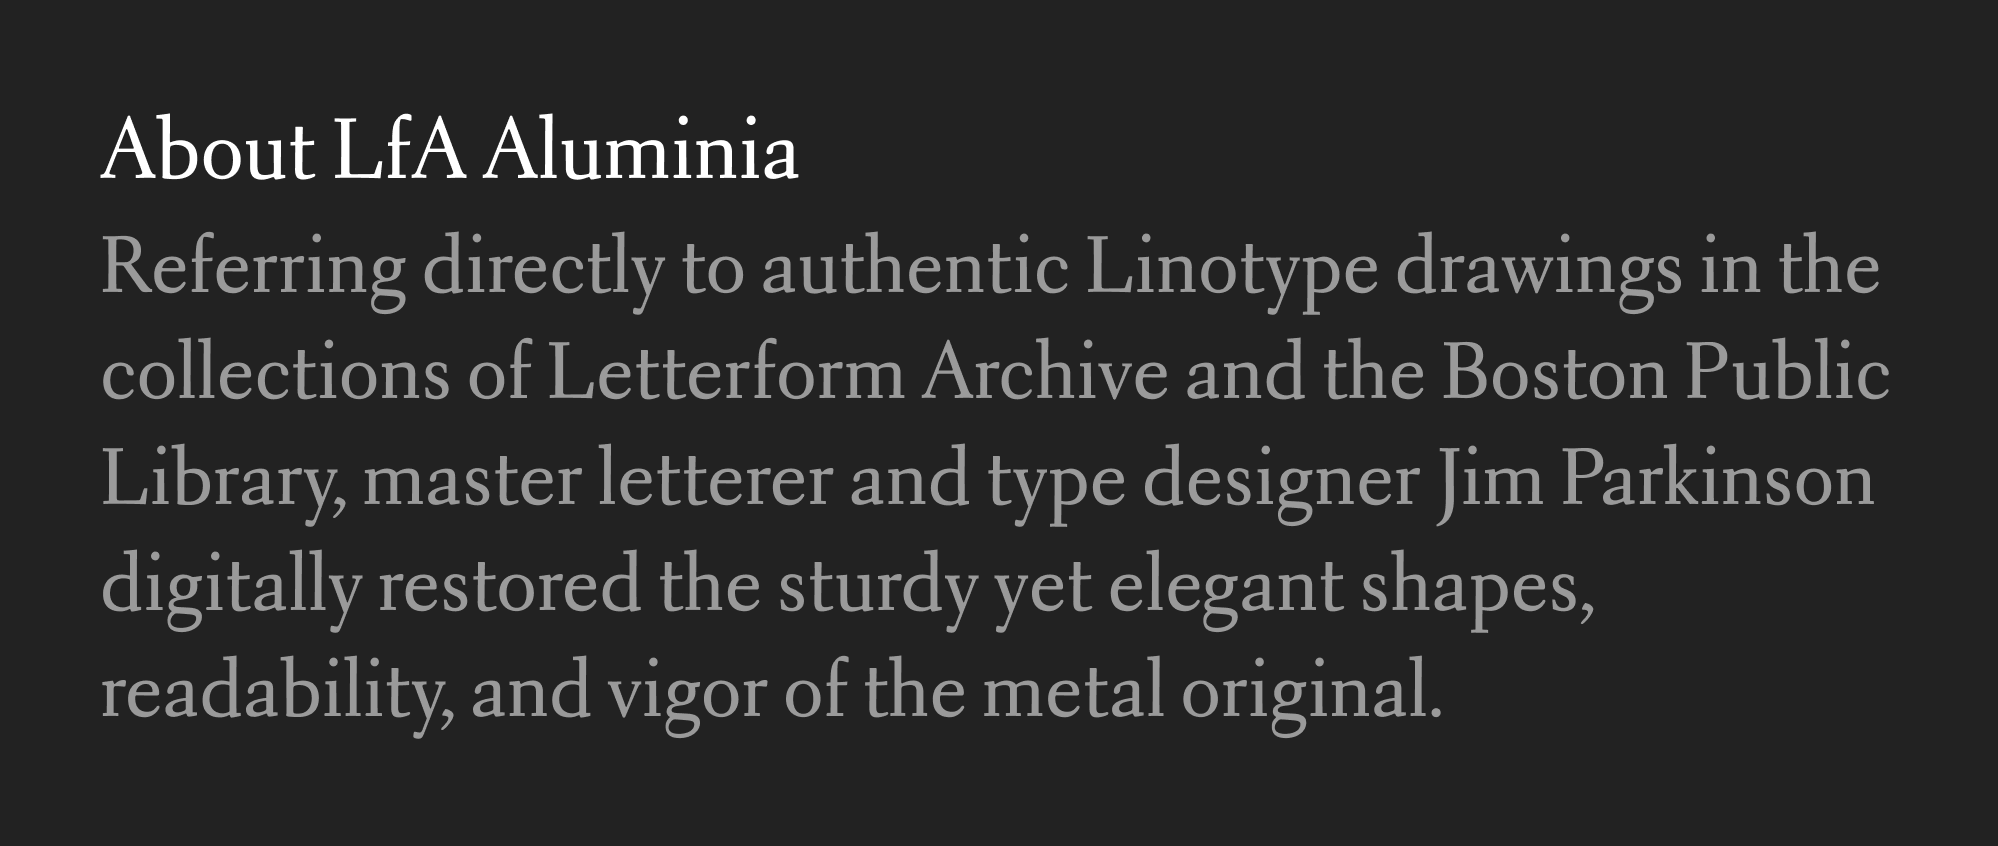 Another specimen of Aluminia